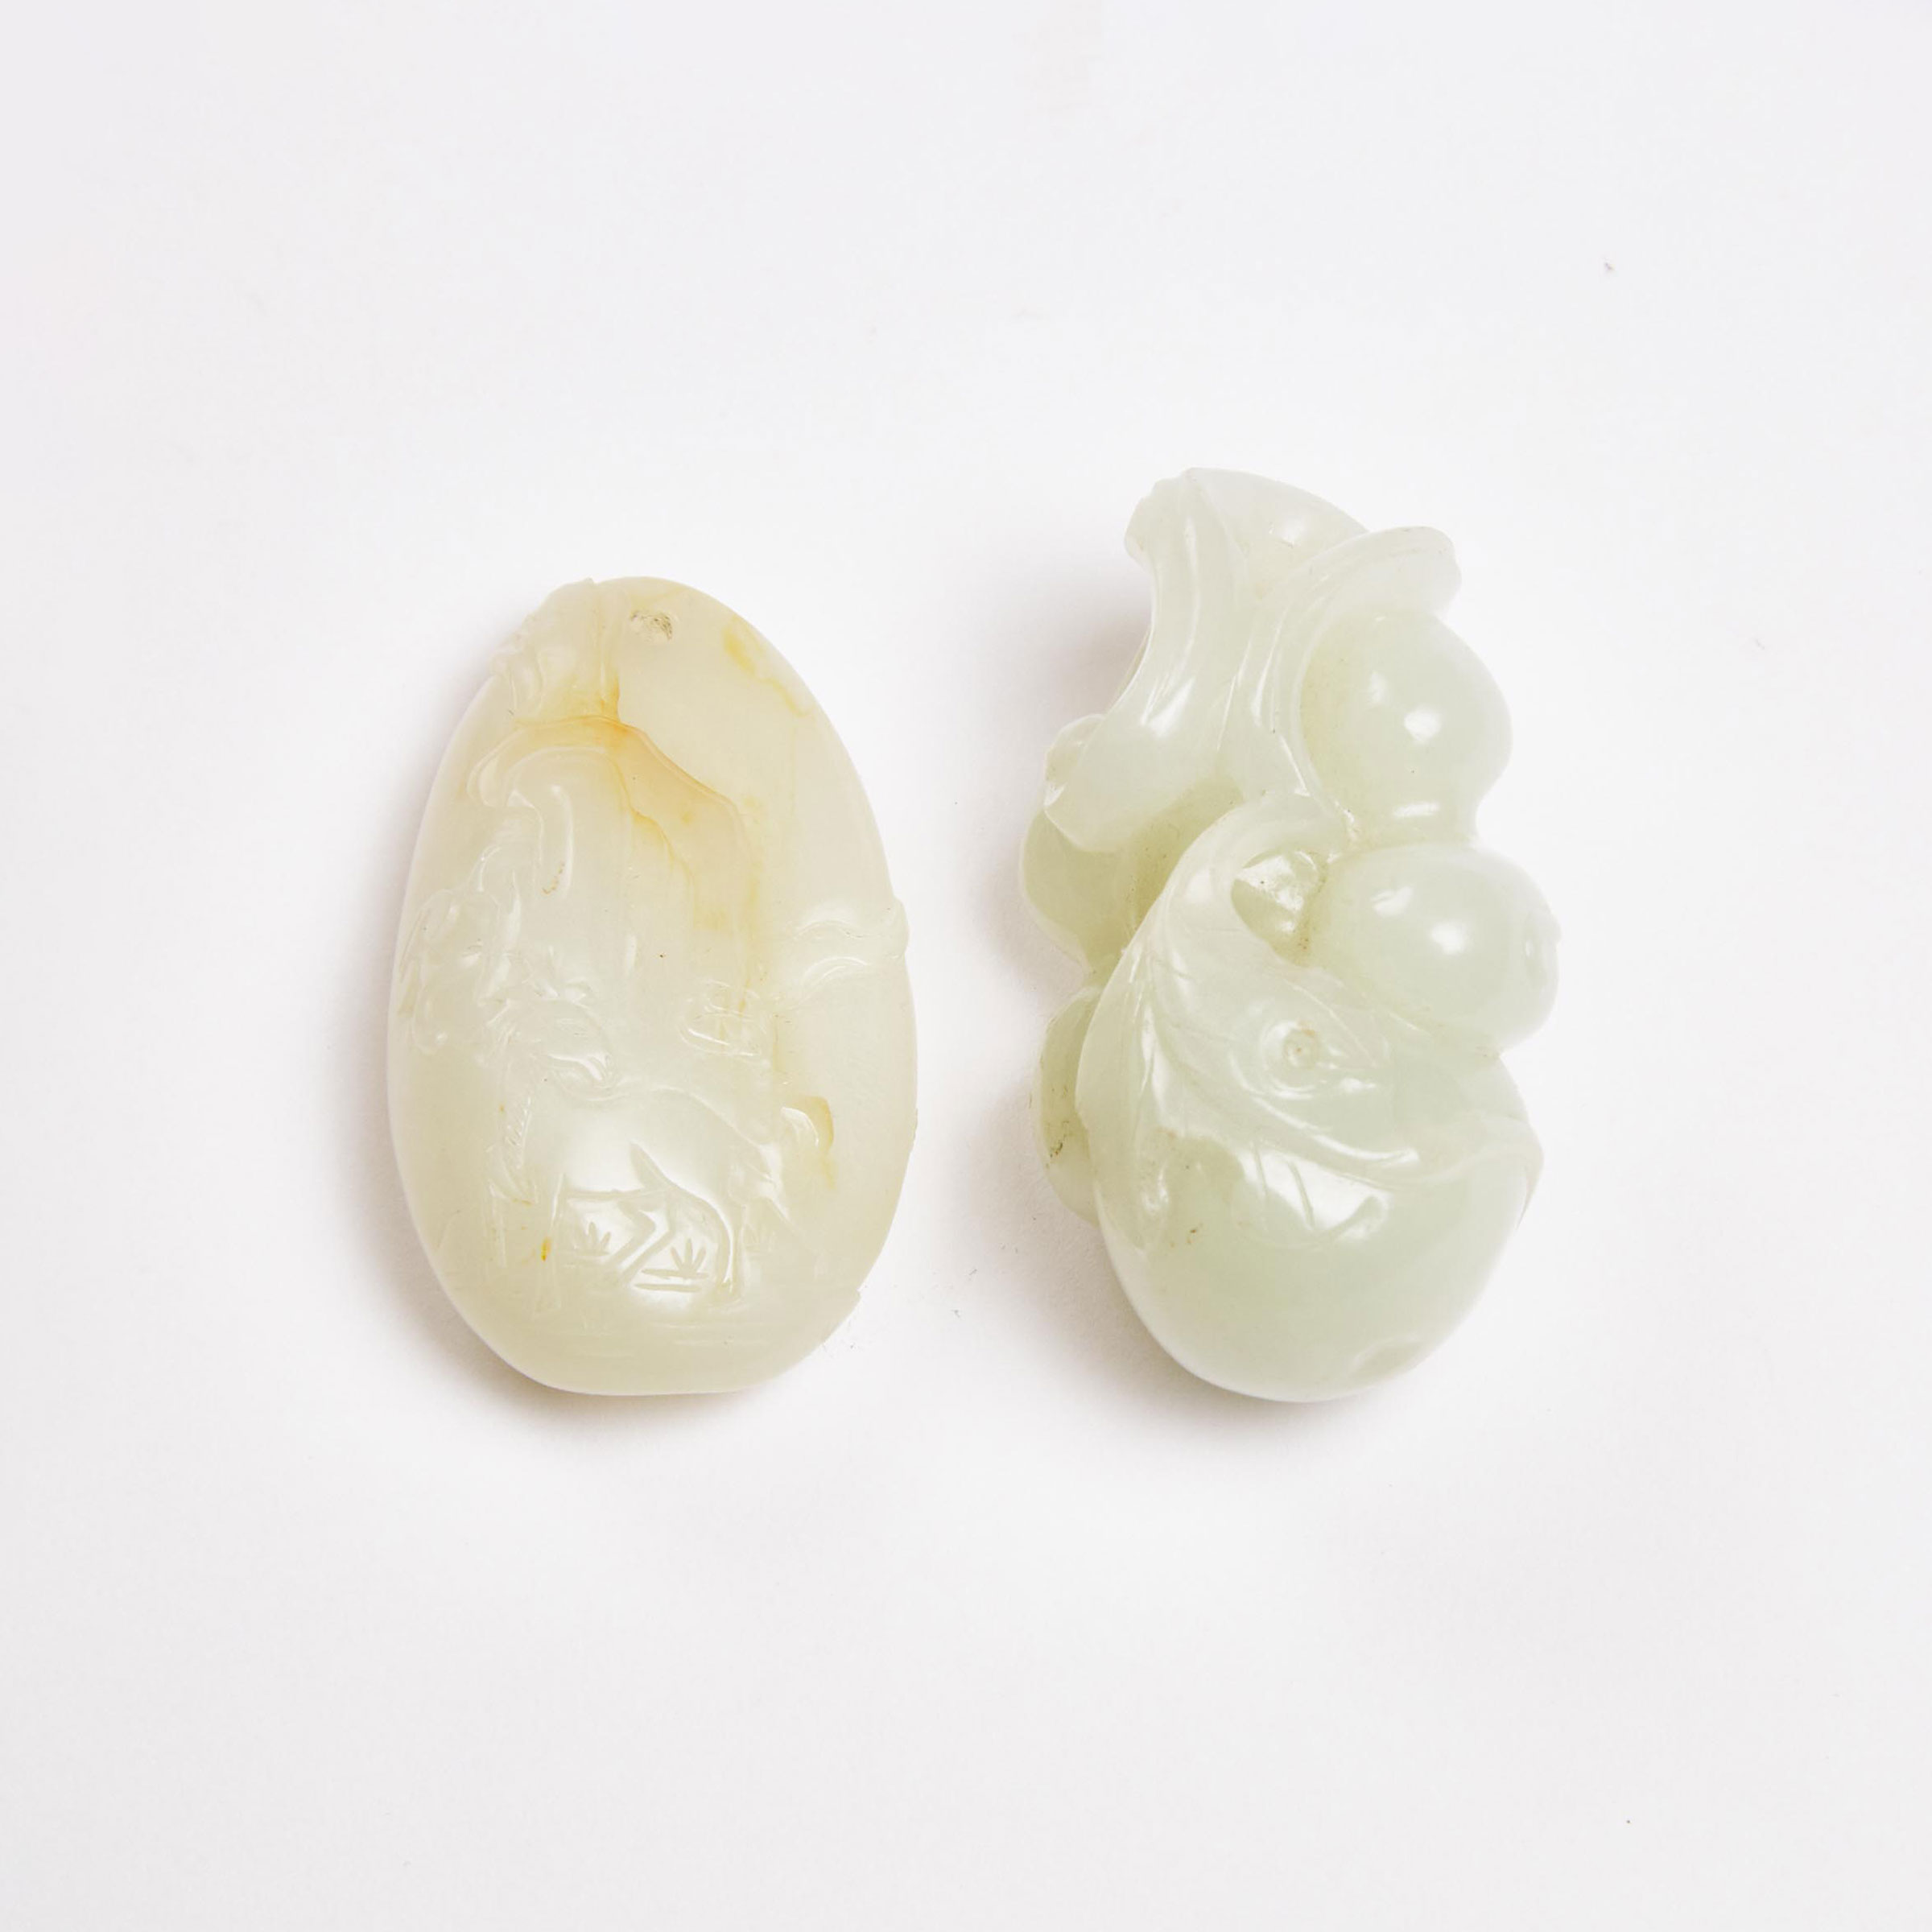 A White Jade 'Double-Gourd' Pendant,